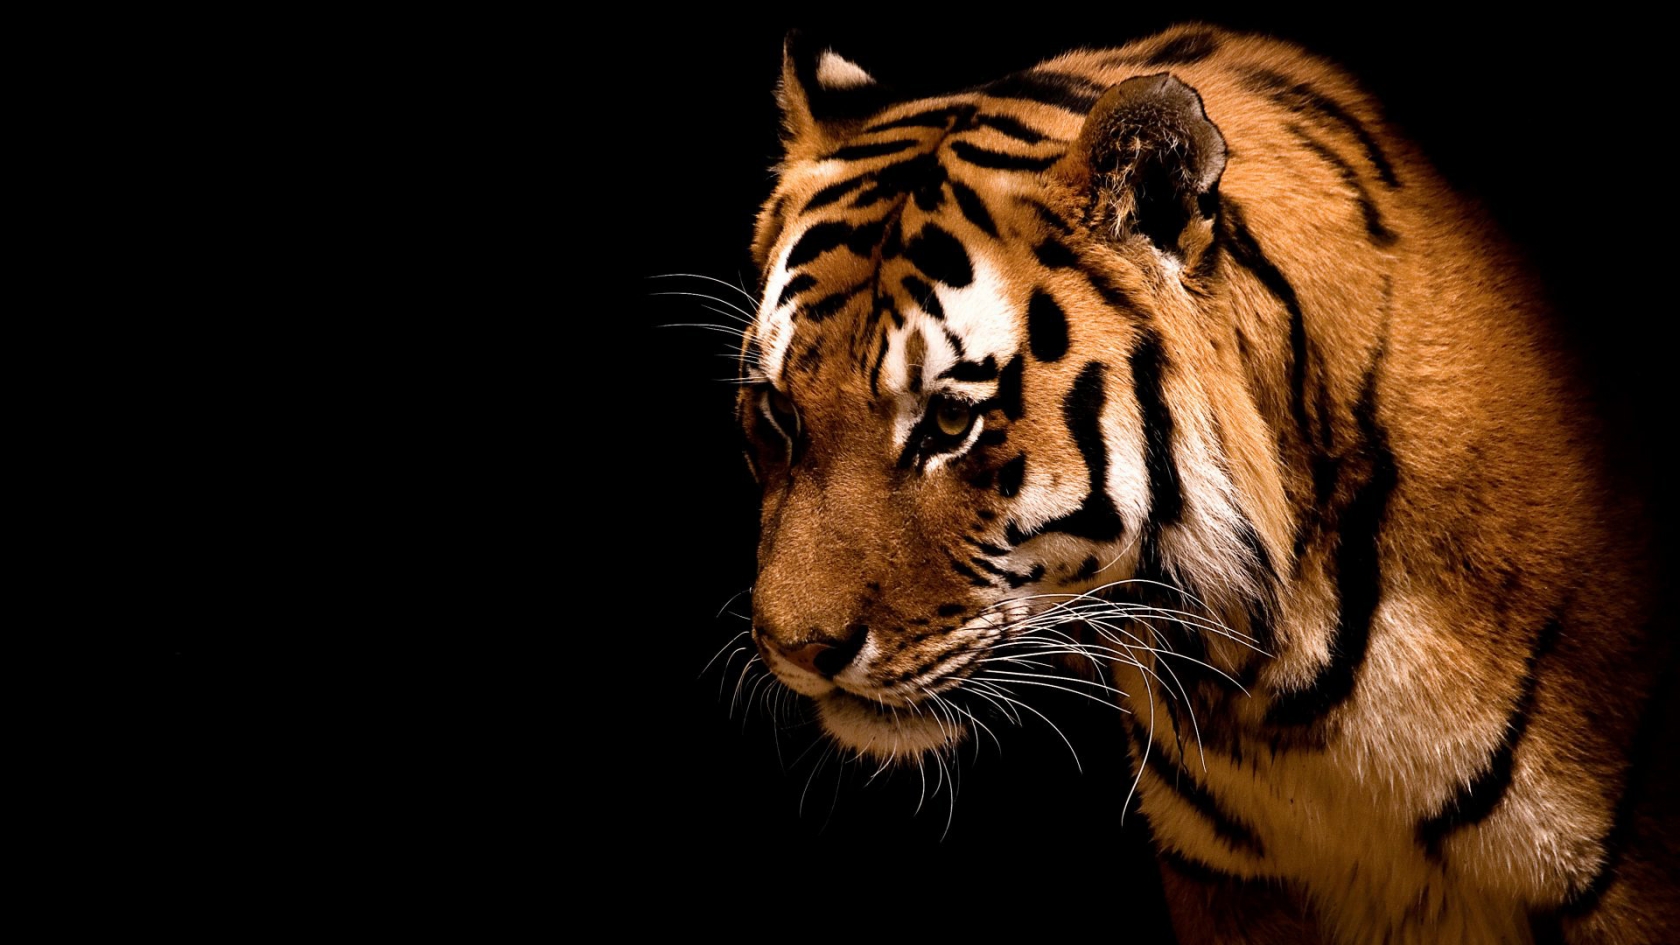 Impressive Tiger for 1680 x 945 HDTV resolution